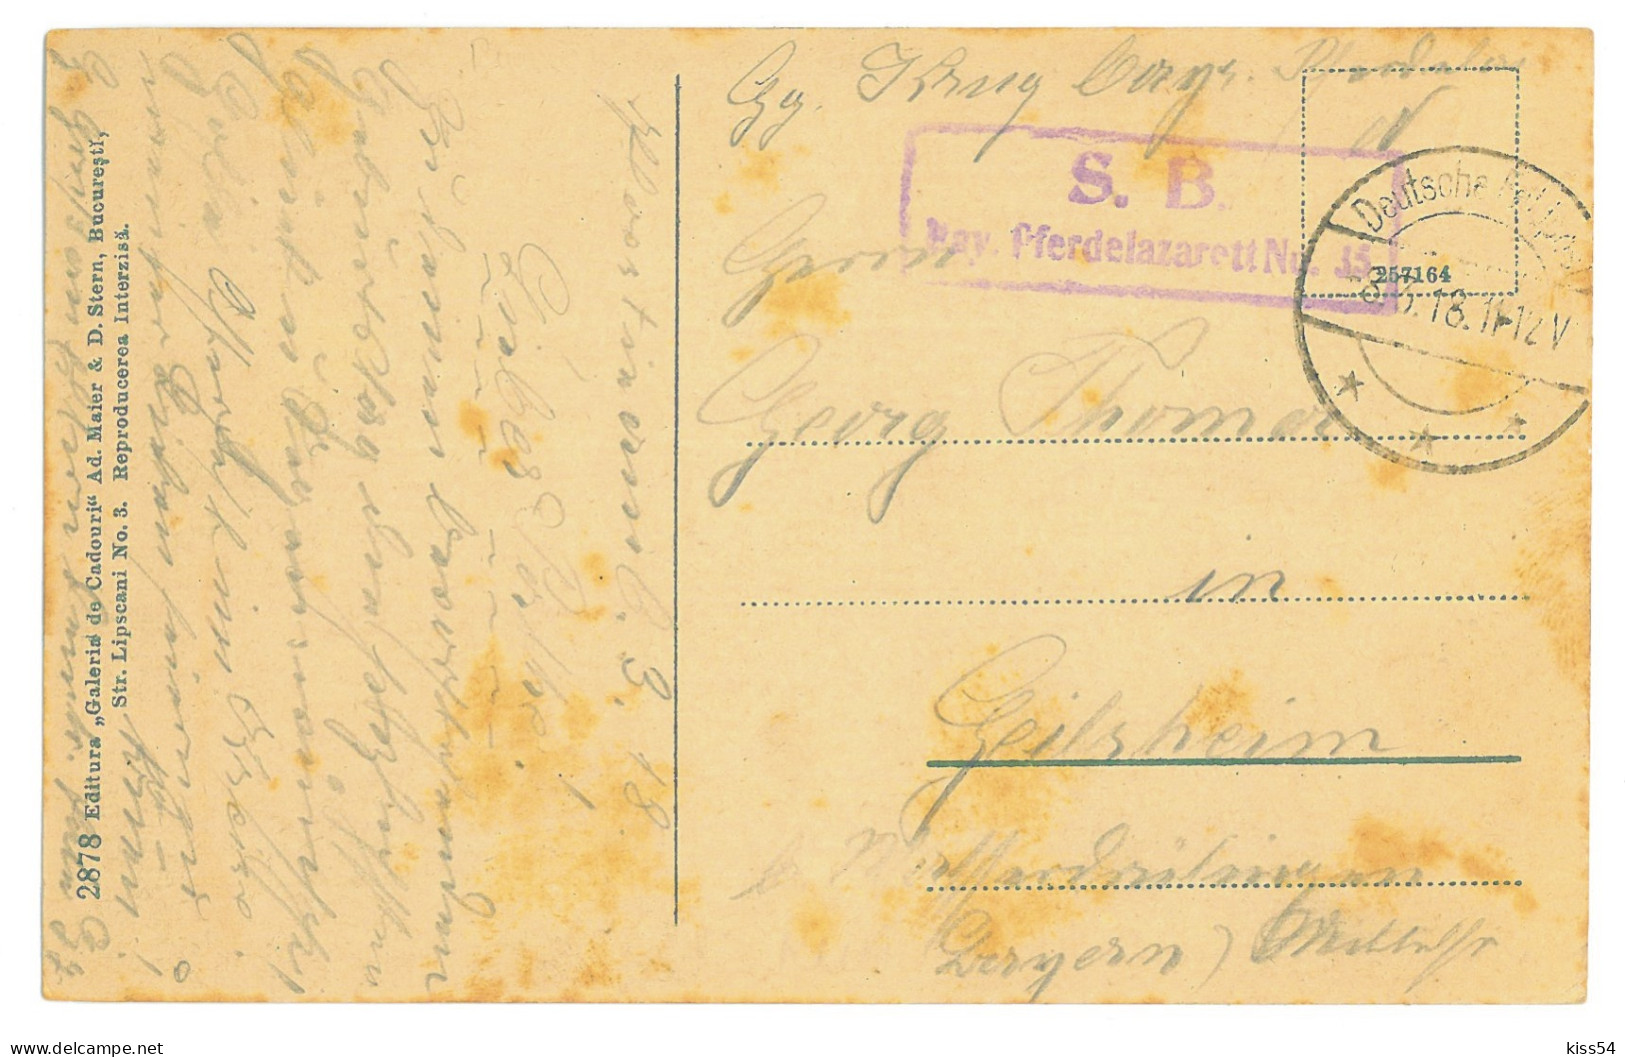 RO 77 - 16502 PLOIESTI, Market, Romania - Old Postcard, CENSOR - Used - 1918 - Romania